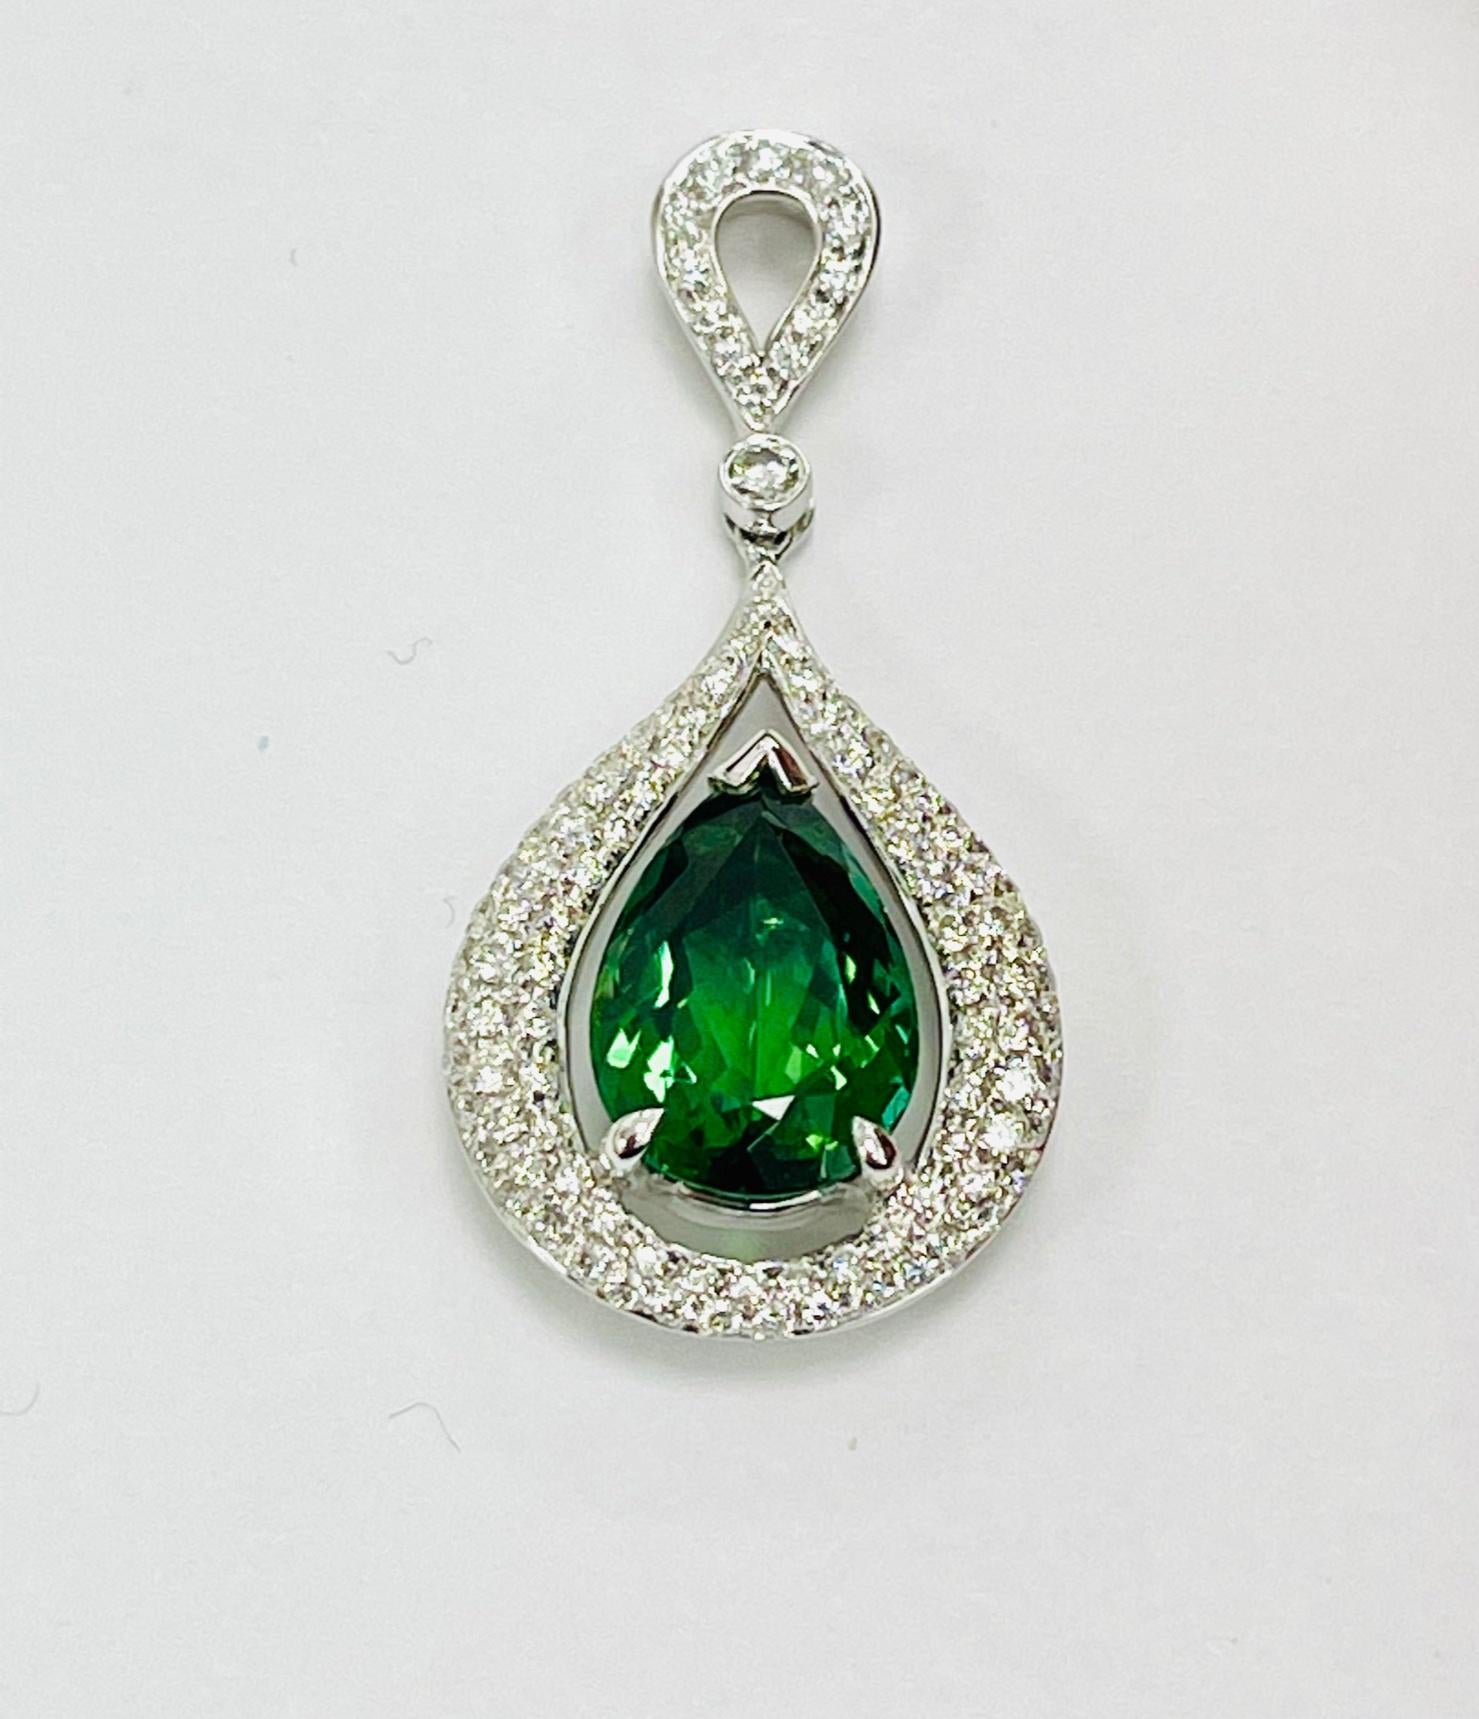 Green tourmaline set in 18k white gold pendant with diamond 